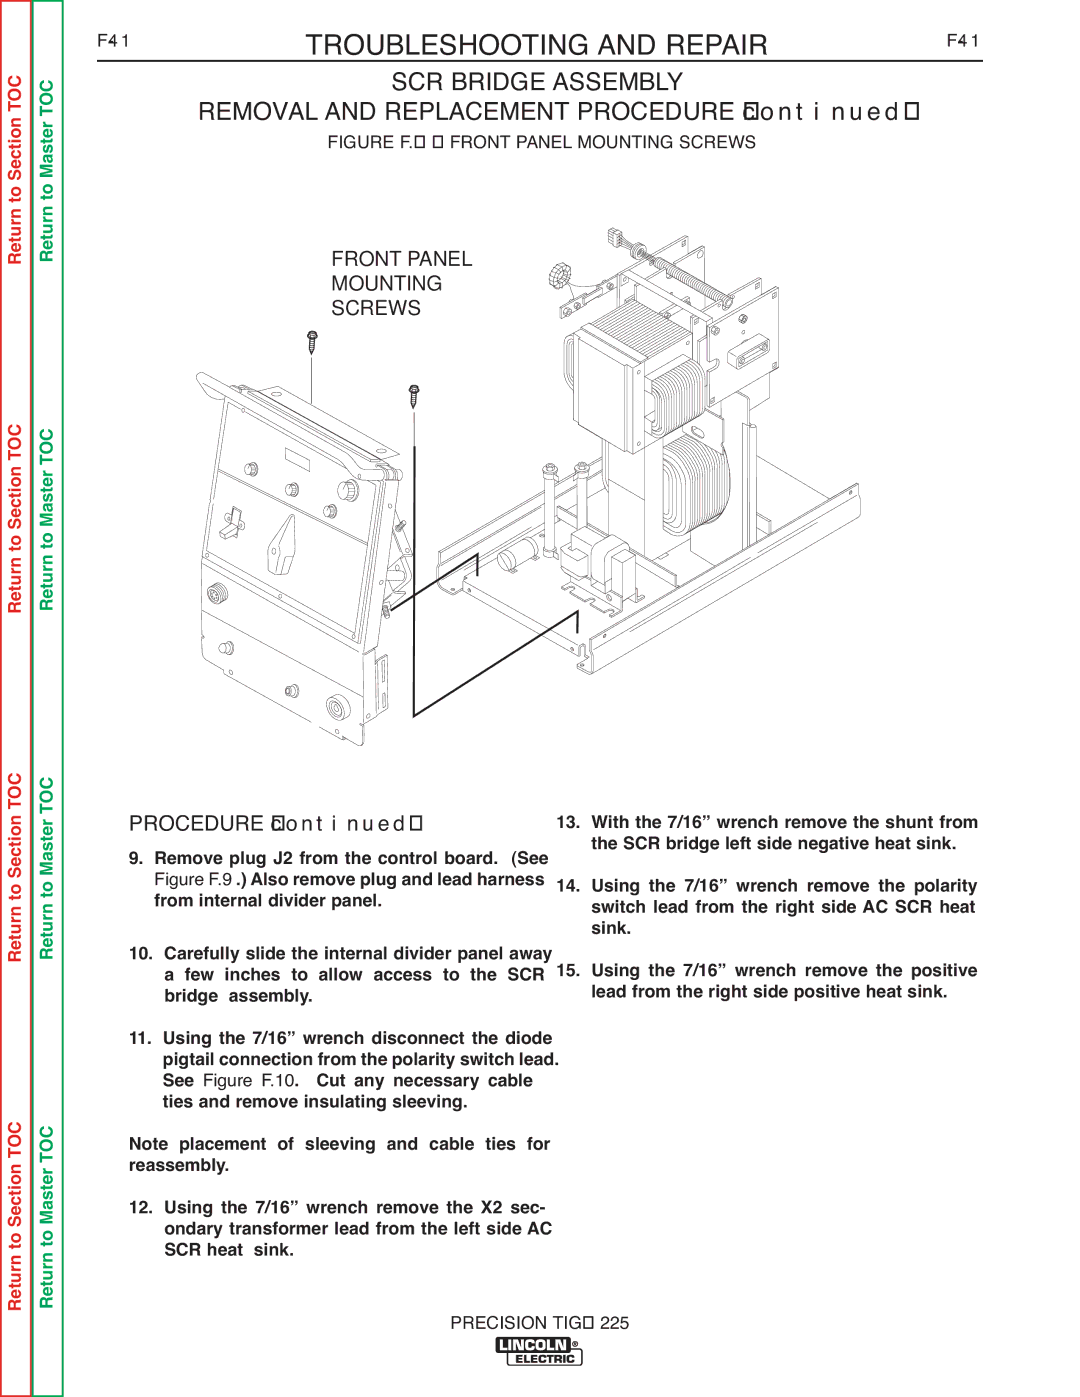 Lincoln Electric SVM186-A service manual Procedure 